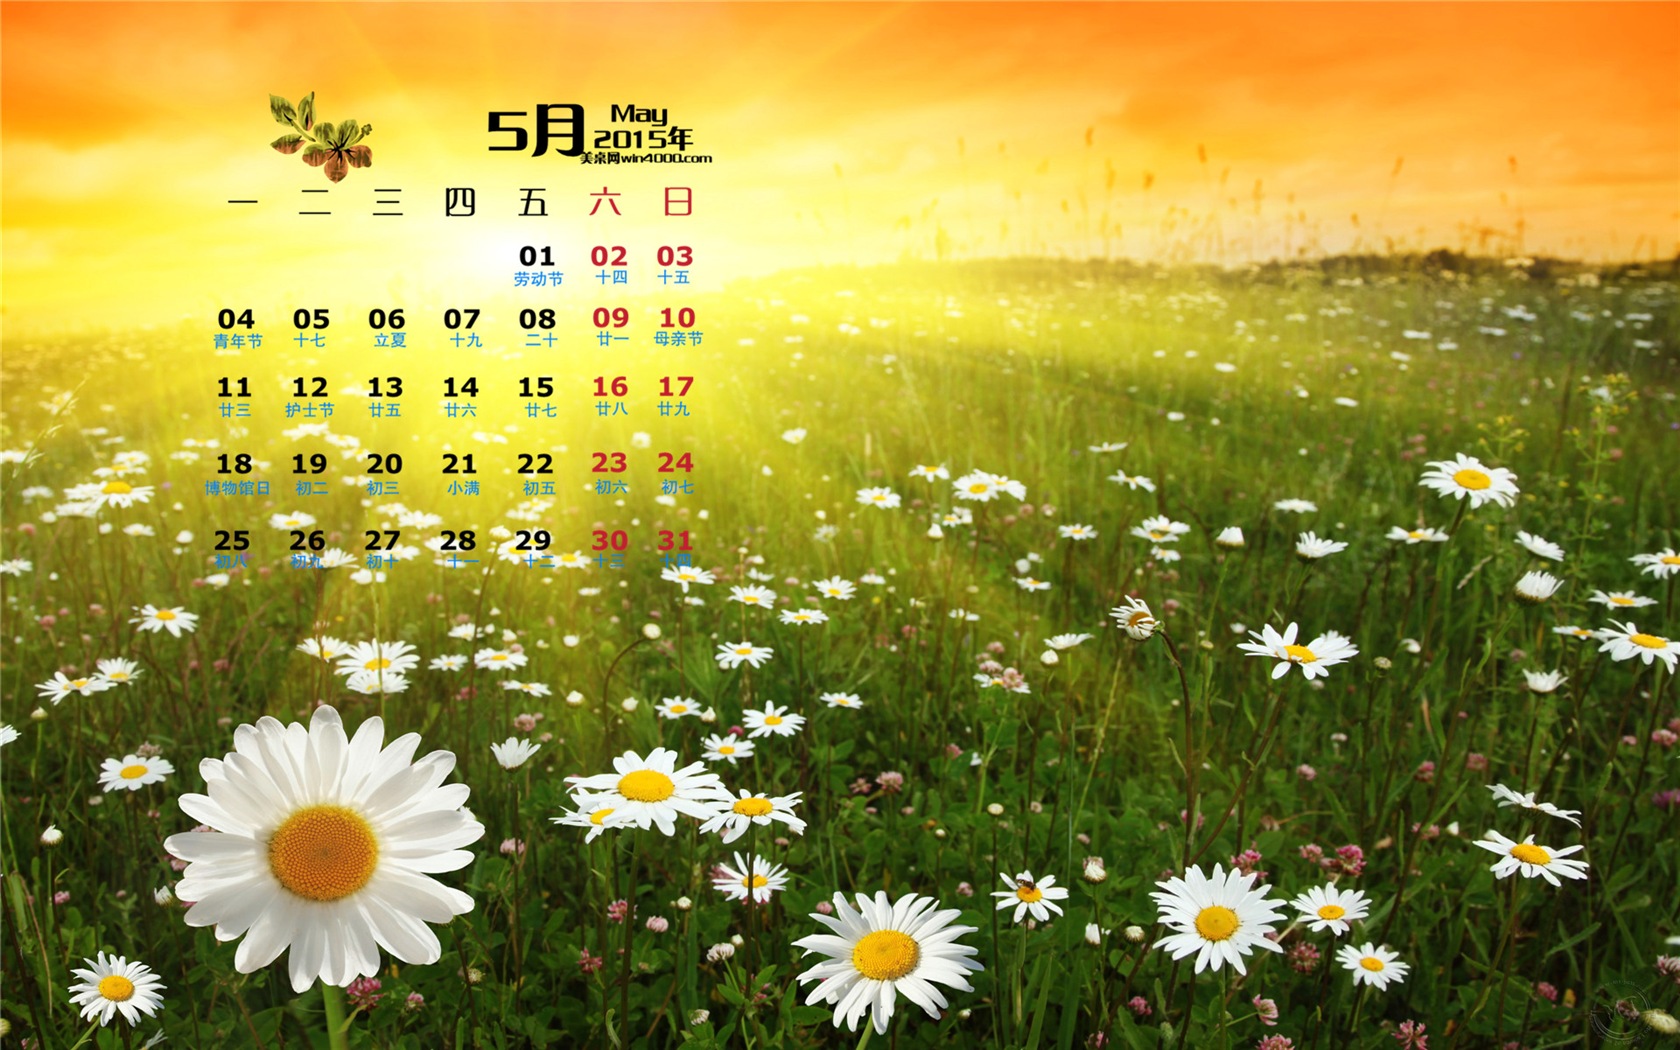 Mai 2015 calendar fond d'écran (1) #15 - 1680x1050